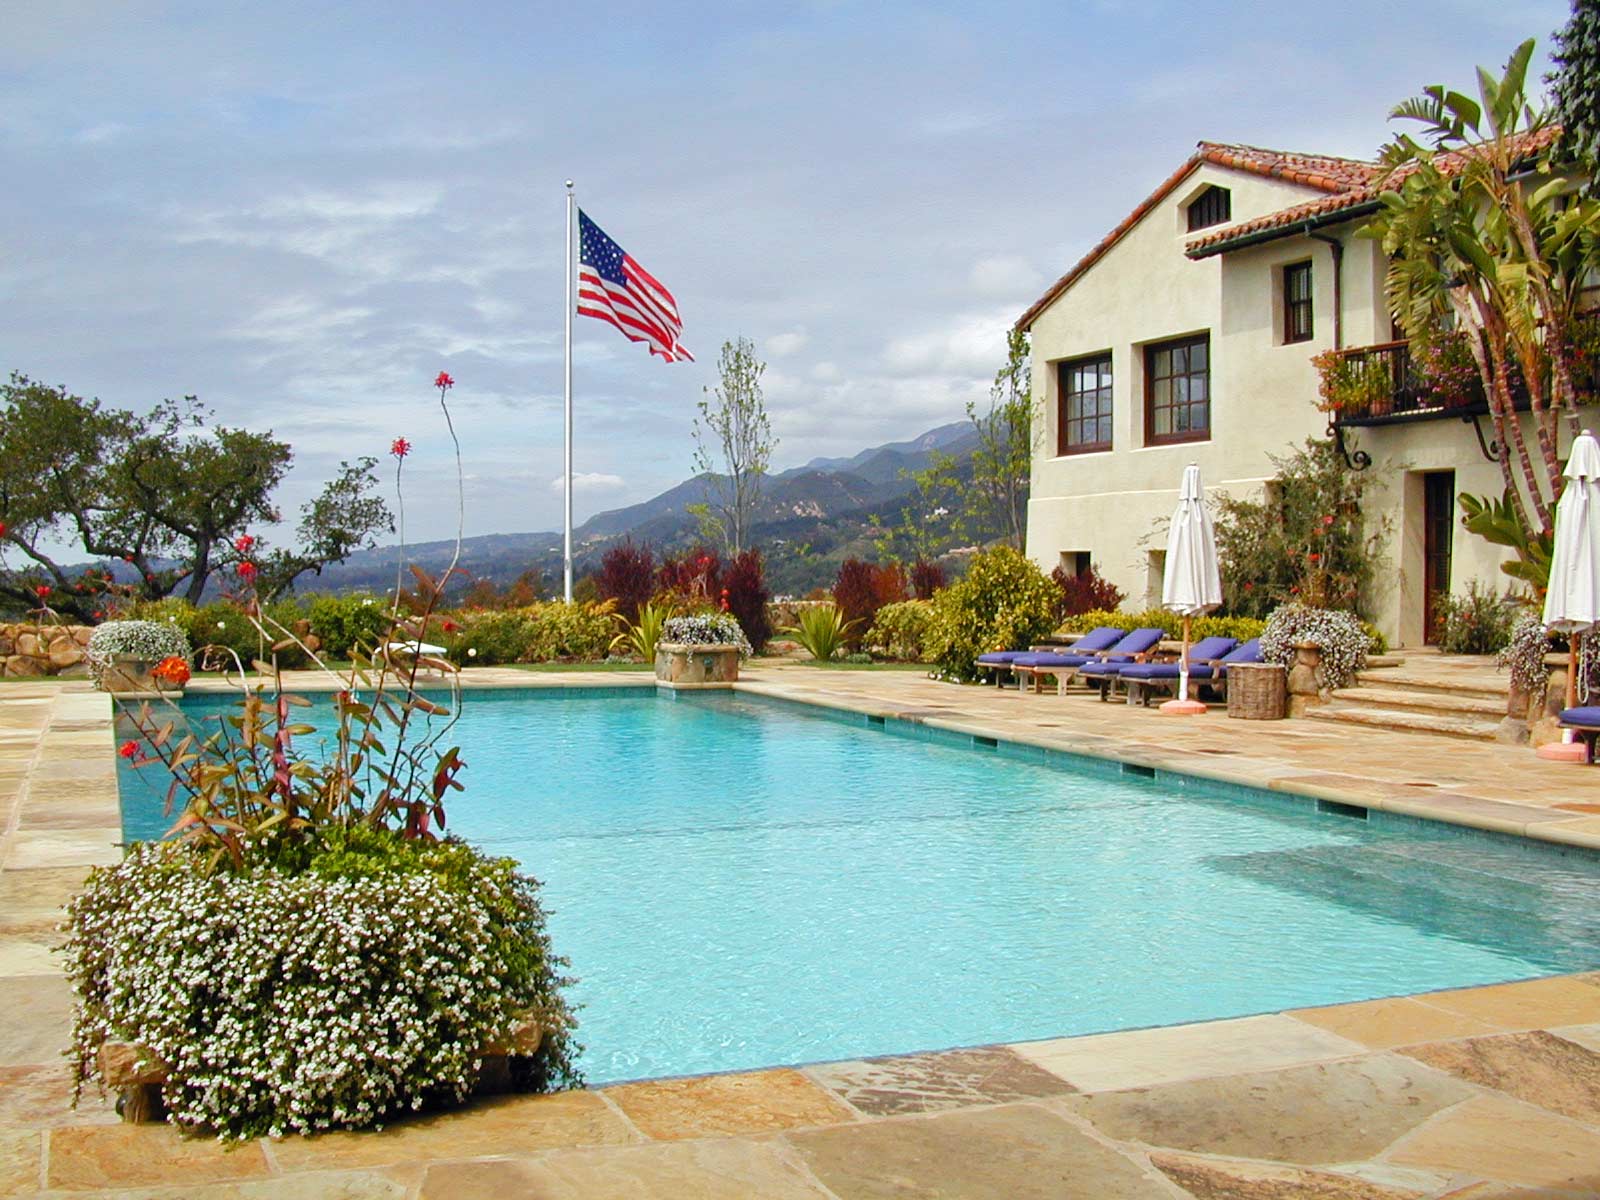 Estate pool in yard with flagpole